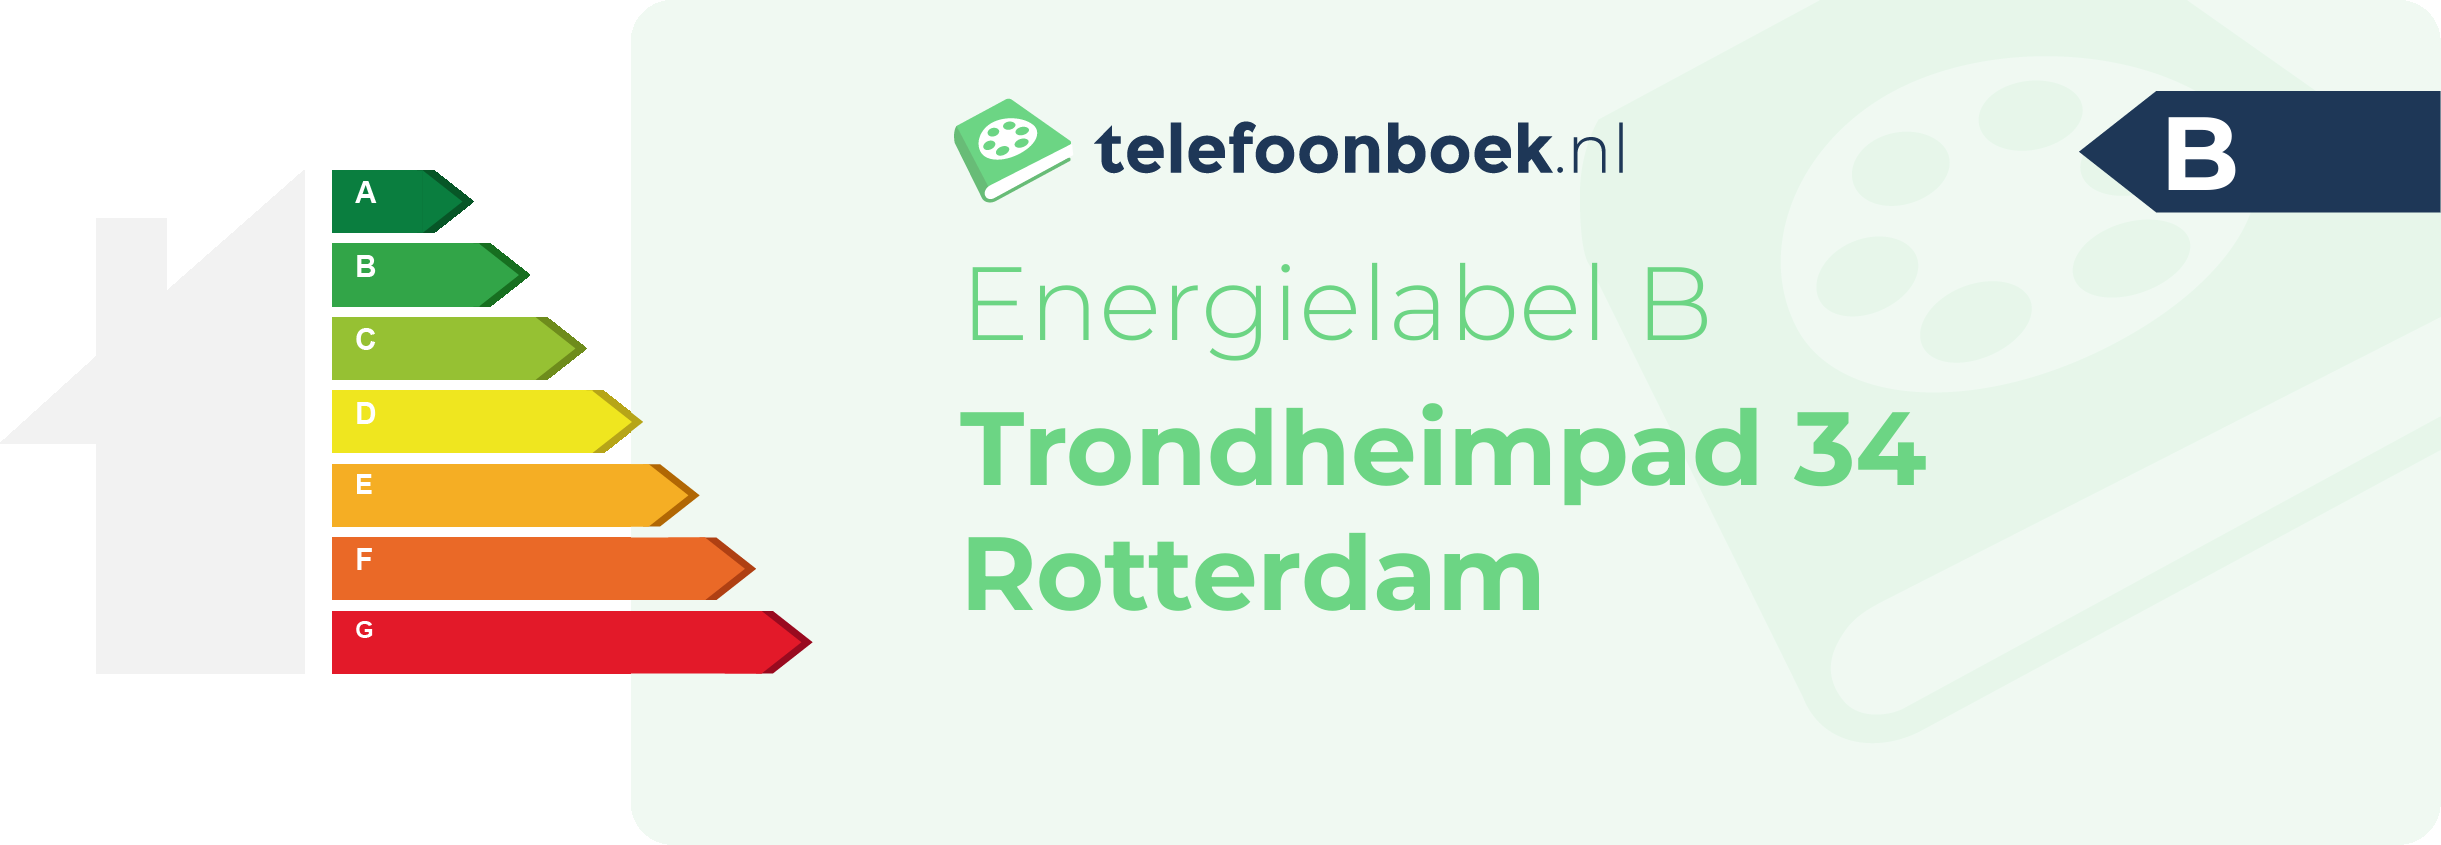 Energielabel Trondheimpad 34 Rotterdam